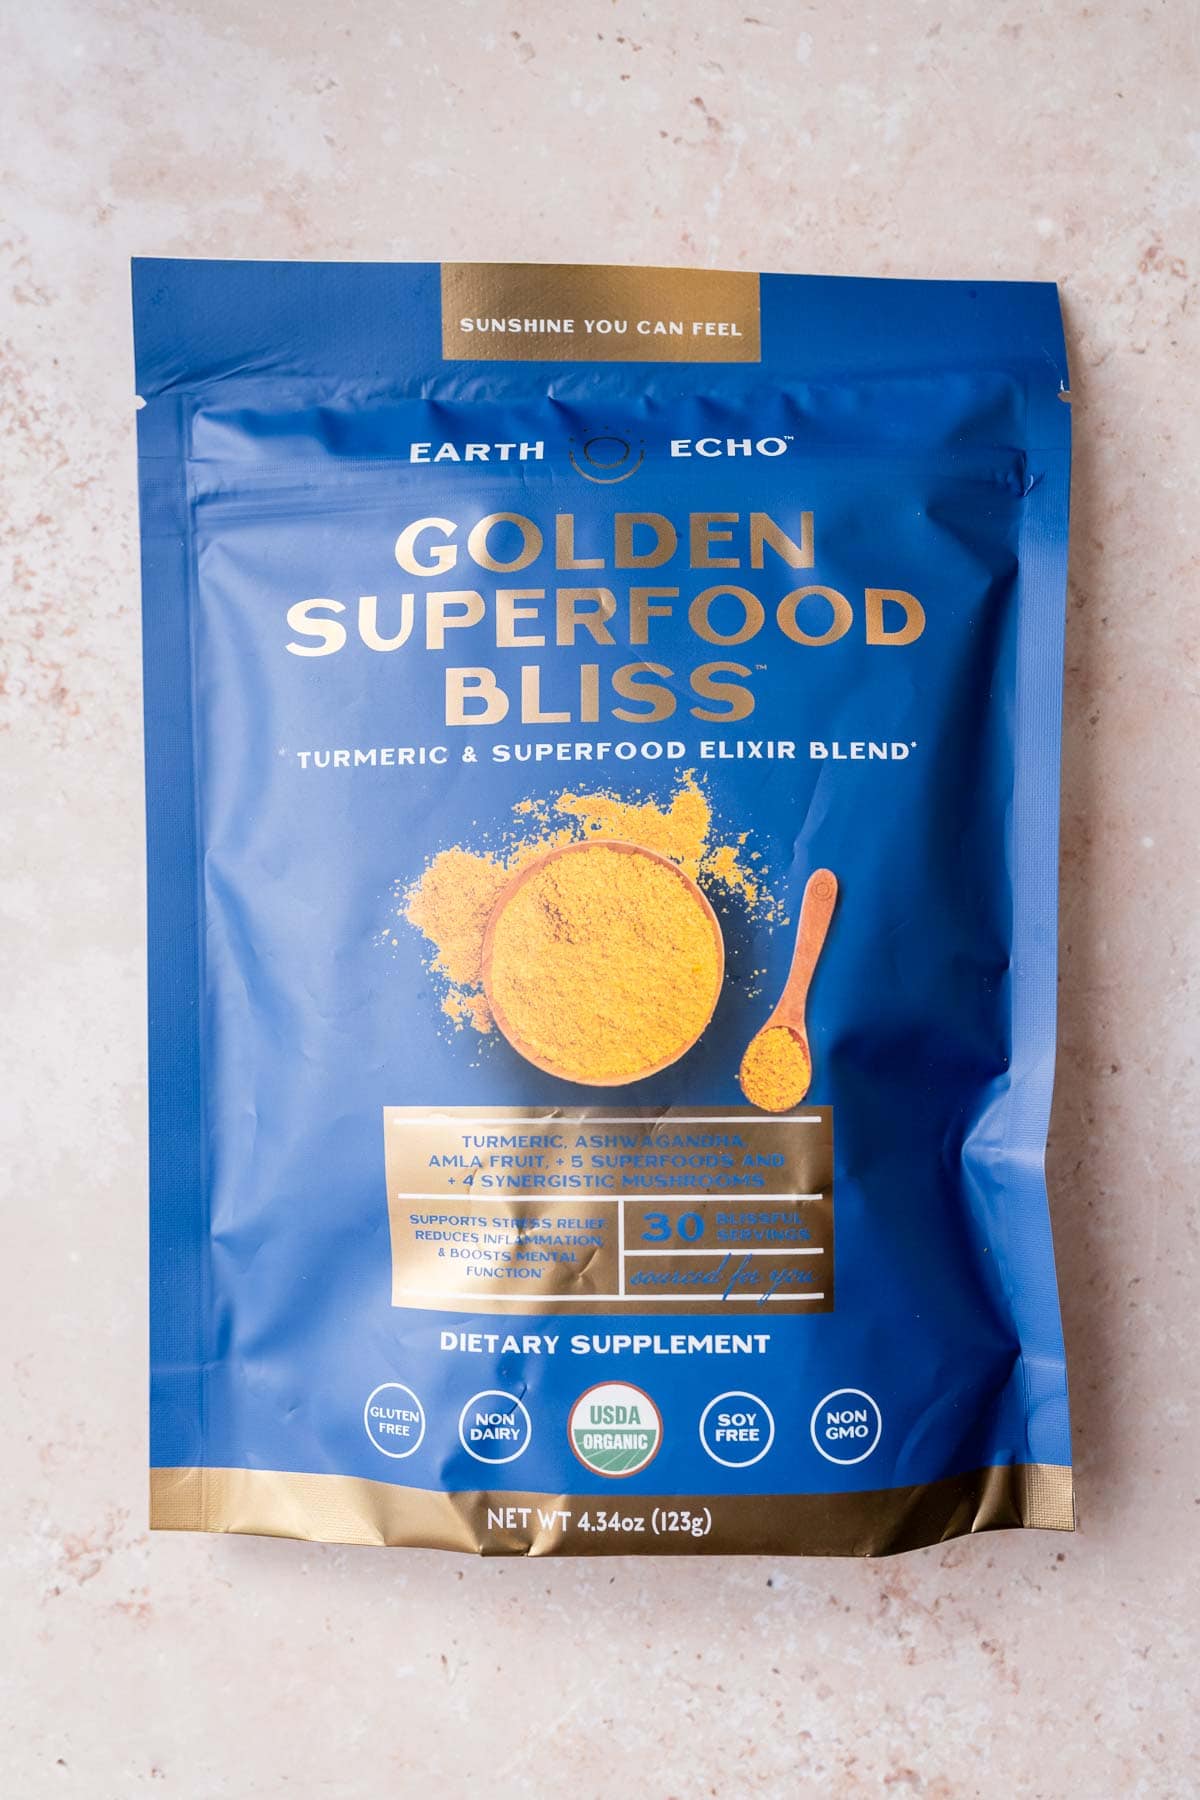 Golden superfood blend for nutritious, energizing golden milk breakfast recipes.